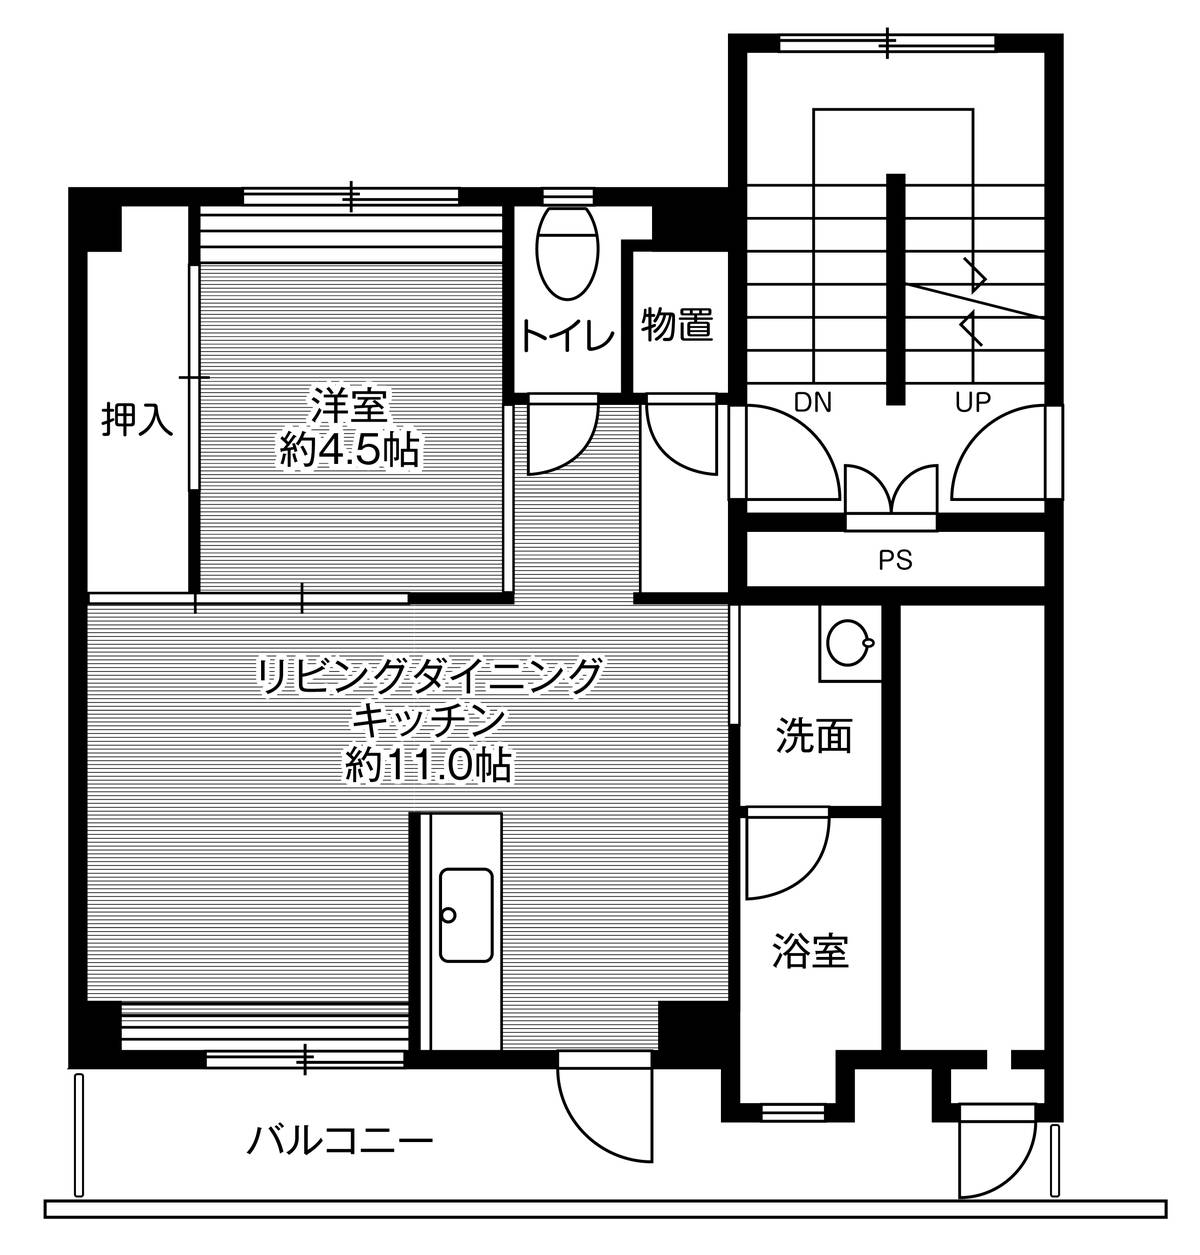 1LDK floorplan of Village House Baba in Kurayoshi-shi